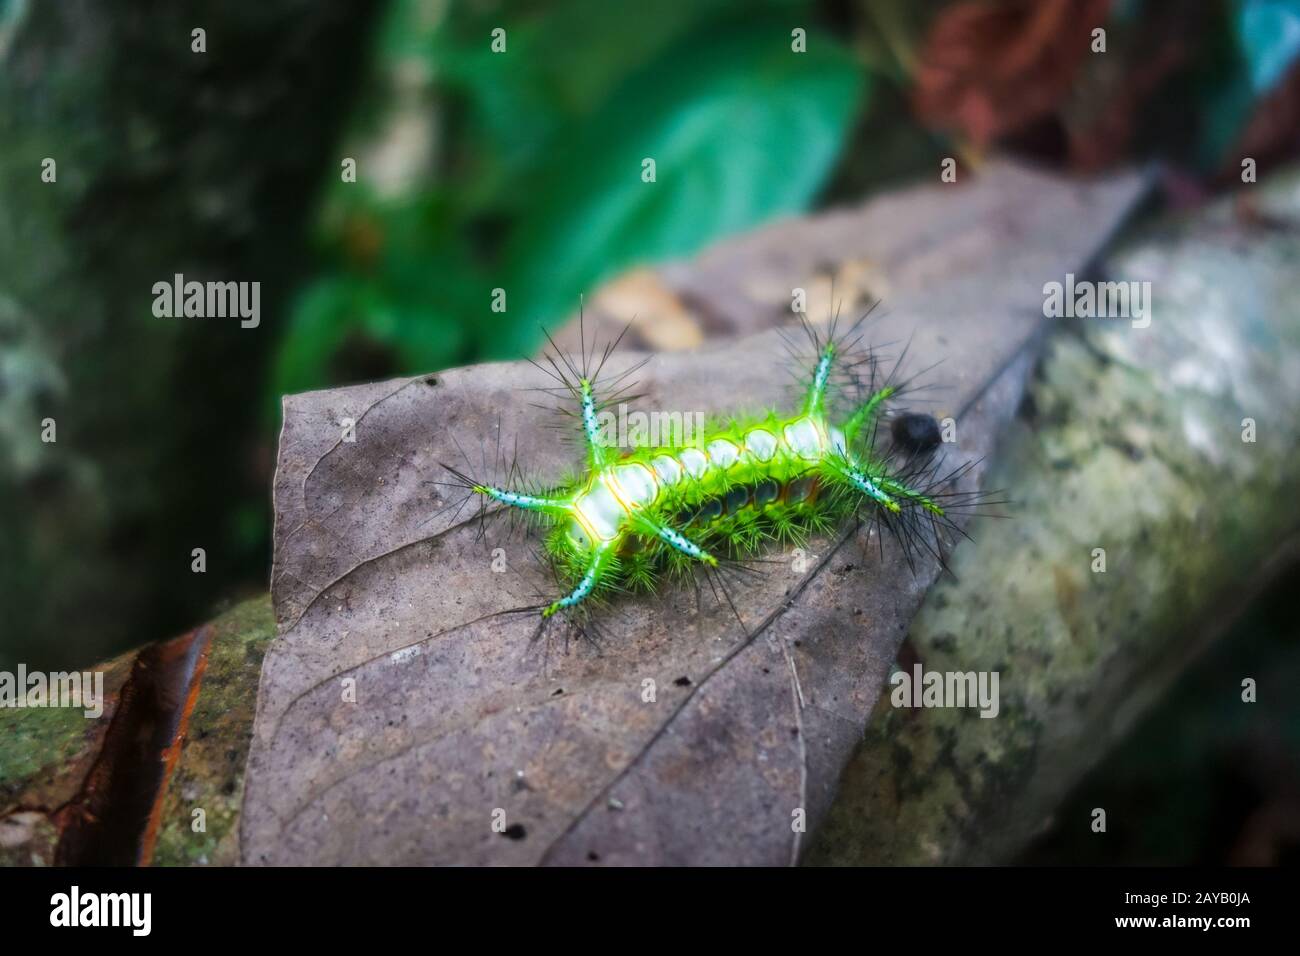 Stinging slug caterpillar hi-res stock photography and images - Alamy